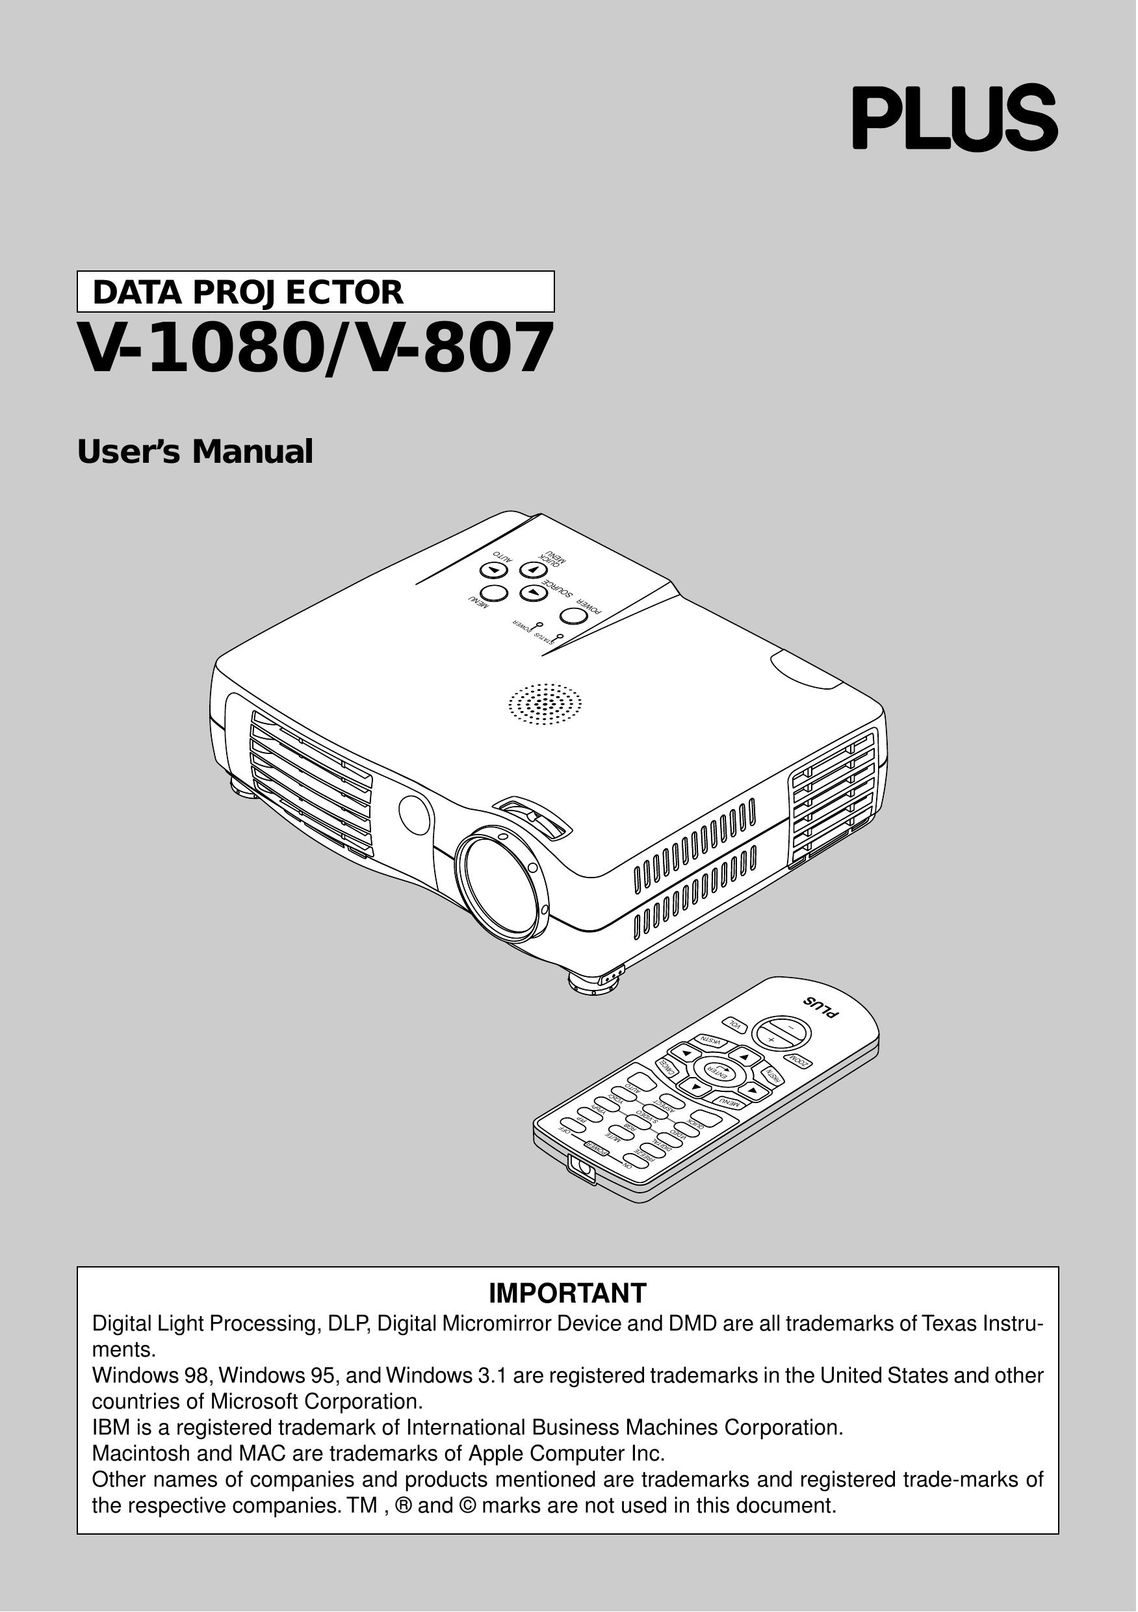 PLUS Vision V-1080 Projector User Manual